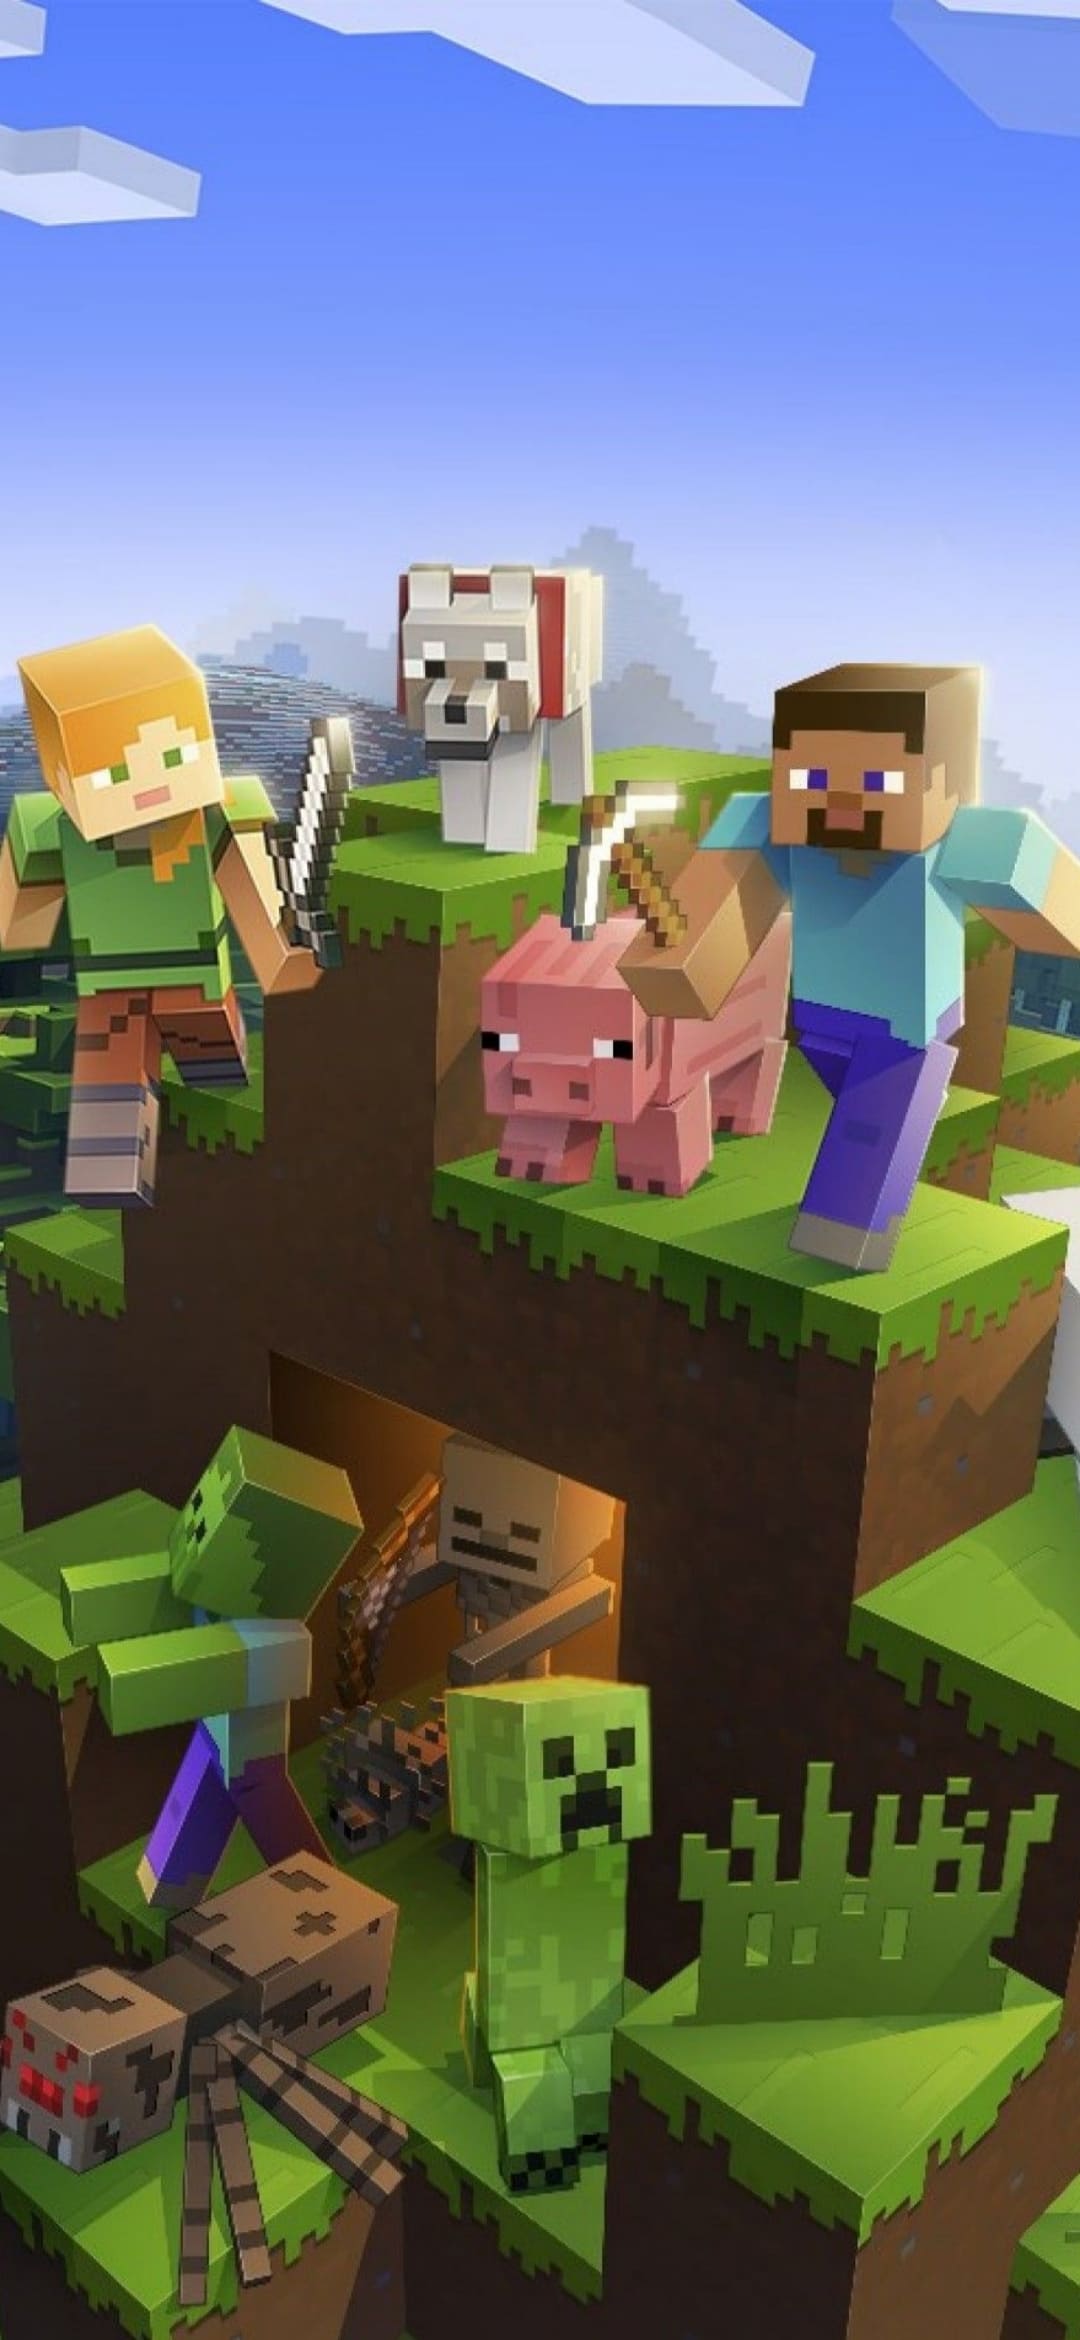 Minecraft Wallpapers   Top 65 Best Minecraft Backgrounds Download